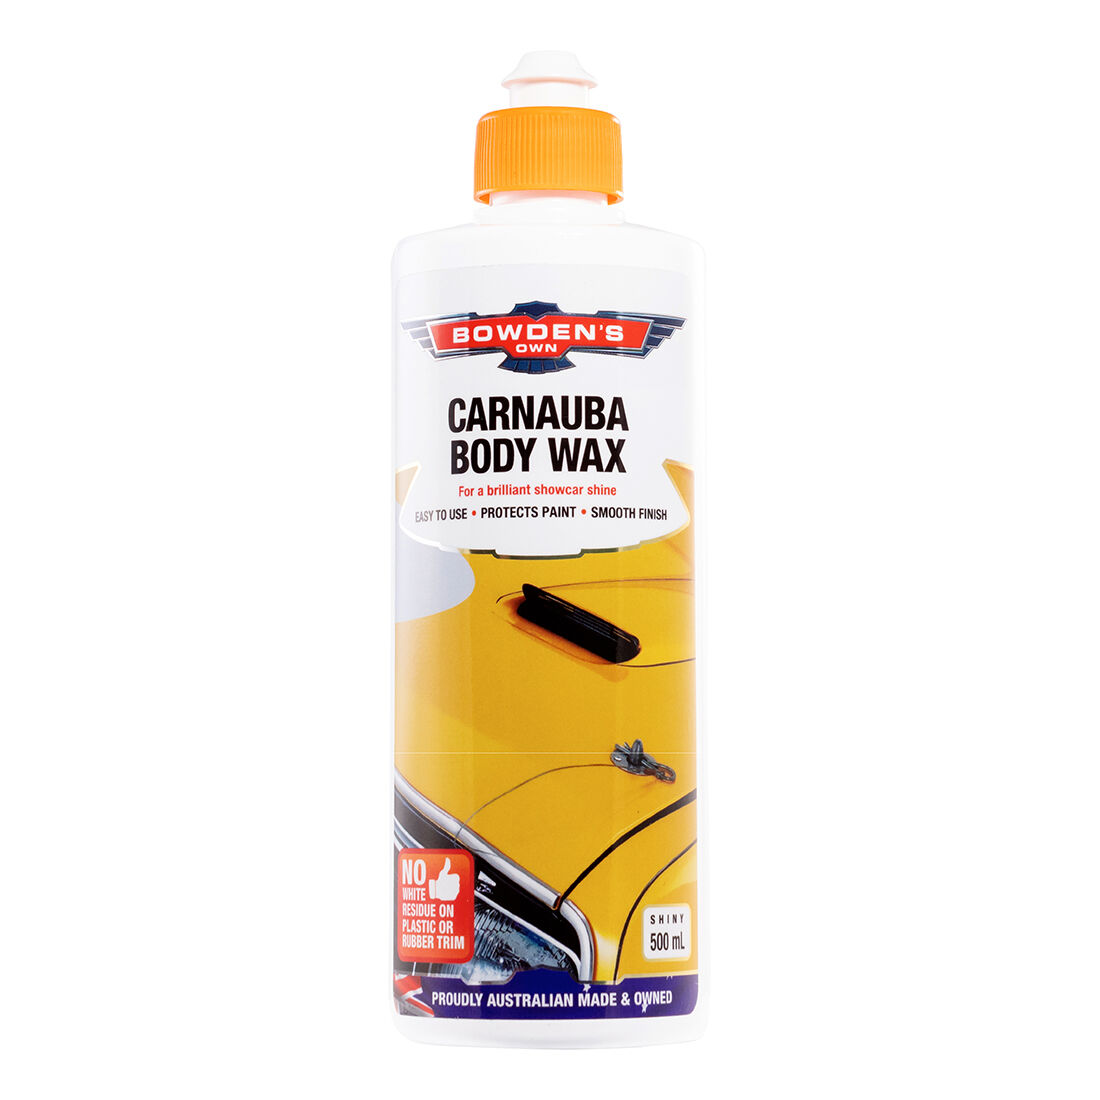 The Treatment – Carnauba Liquid Wax